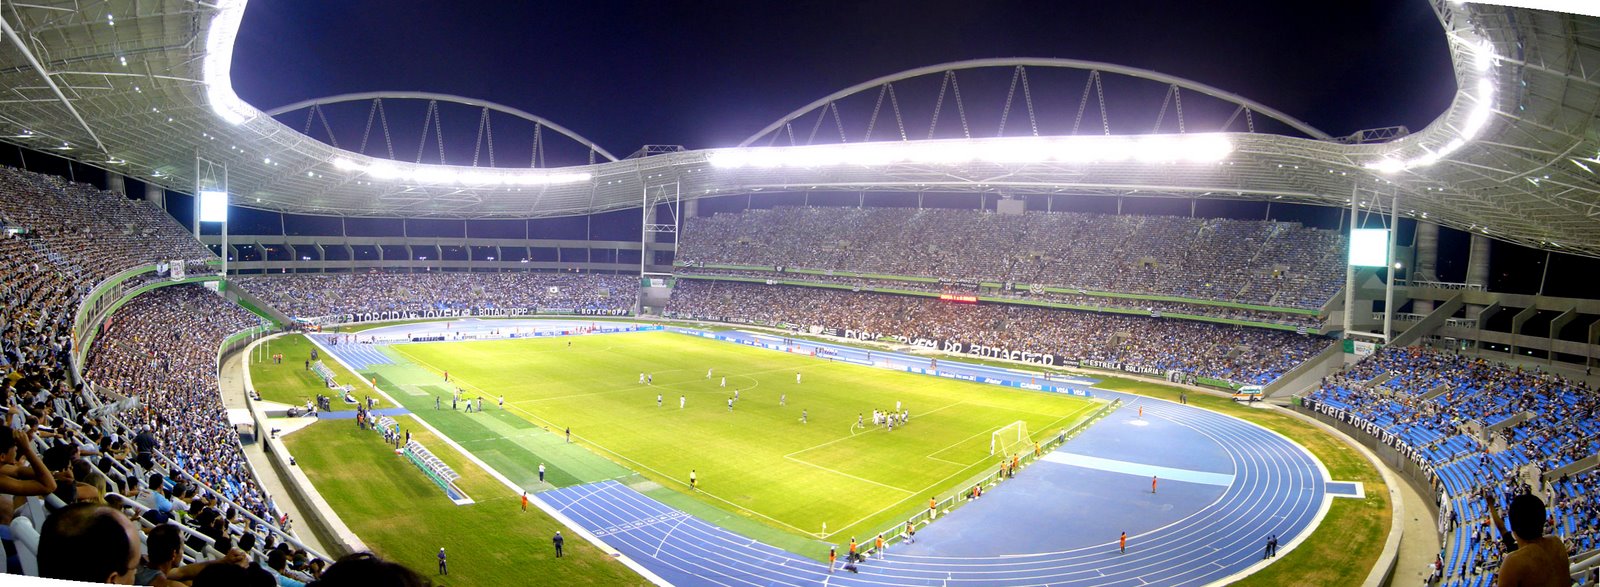 João Havelange Stadium at night